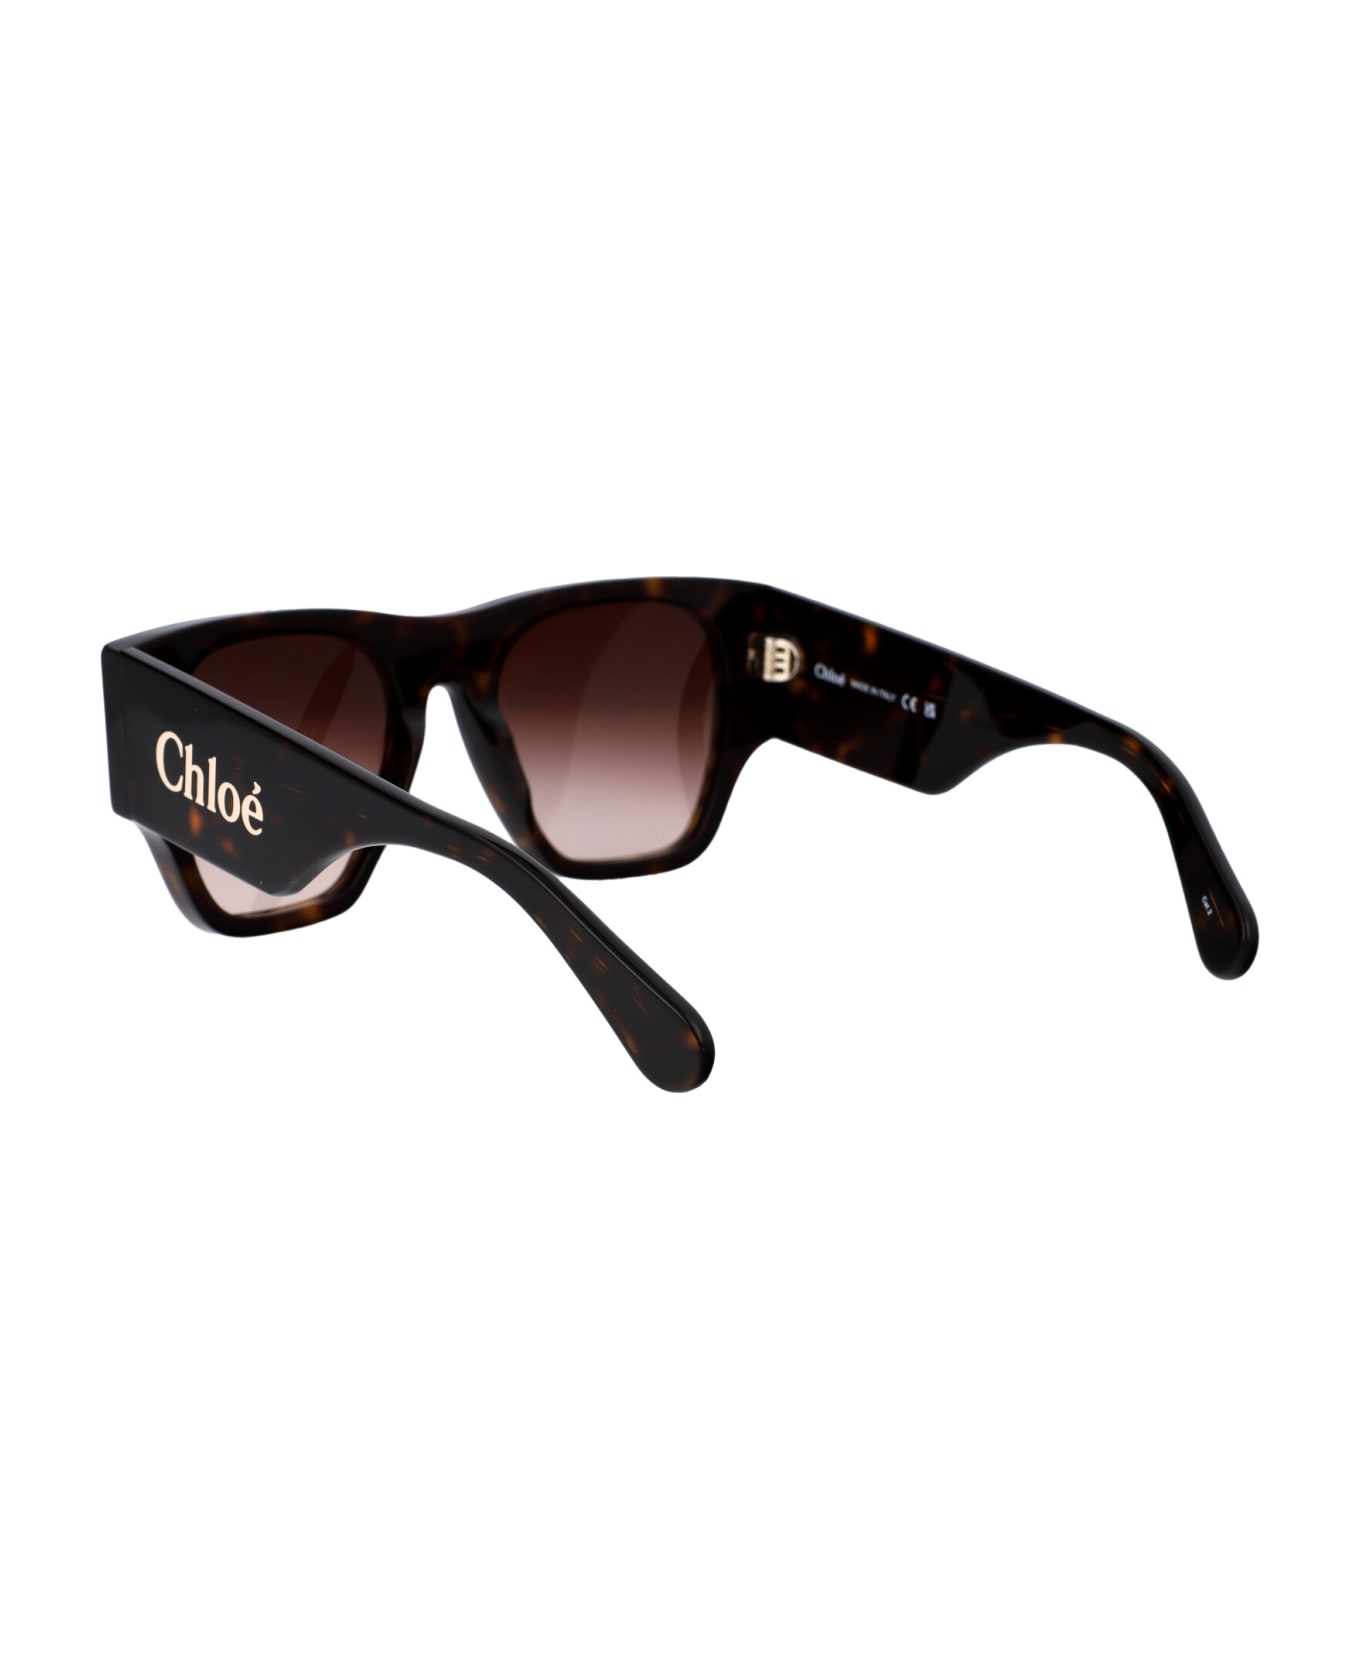 Chloé Eyewear Ch0233s Sunglasses - 002 HAVANA HAVANA BROWN サングラス